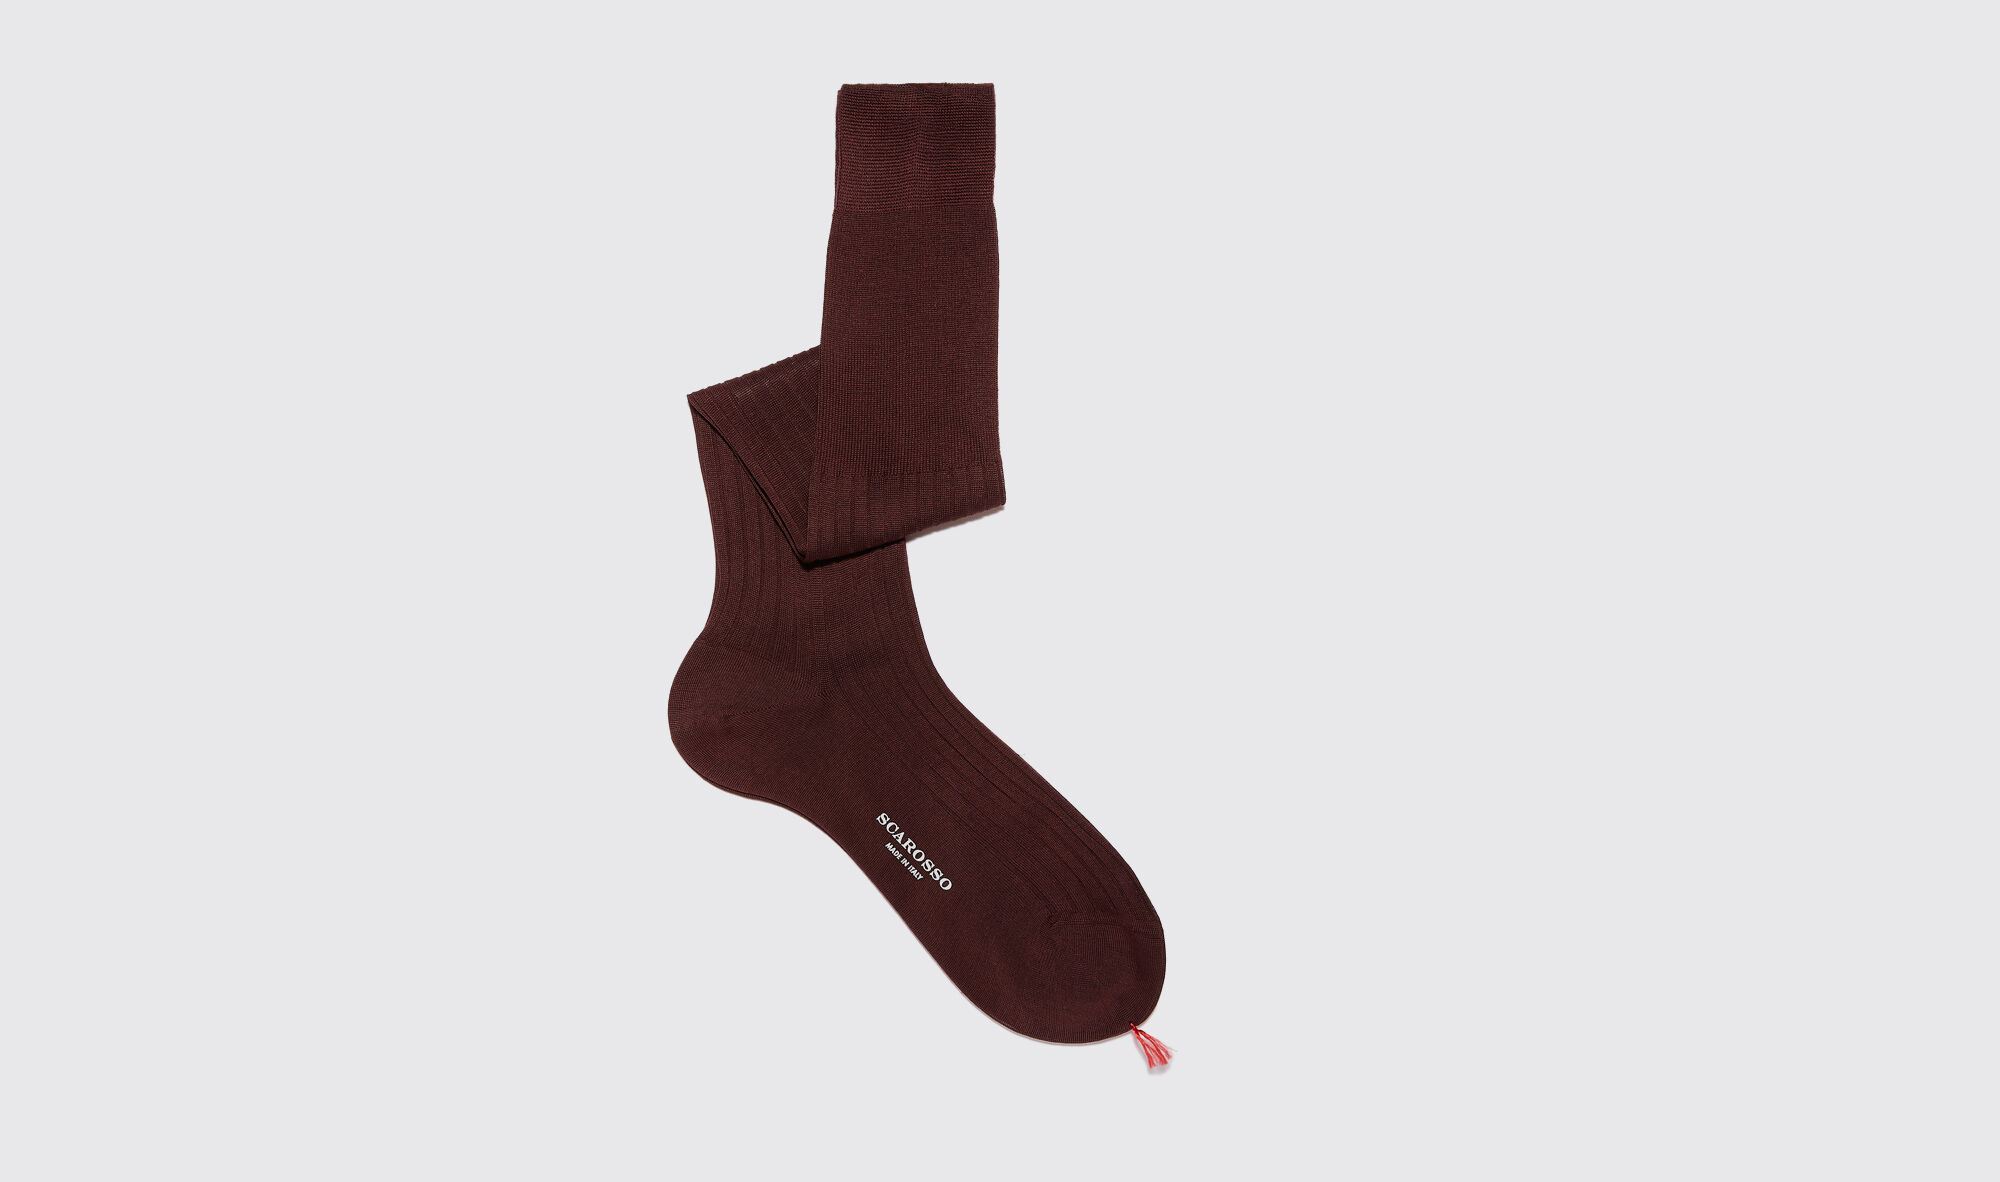 Scarosso Burgundy Cotton Knee Socks - Uomo Prima Che Finiscano Borgogna - Cotone 44-45